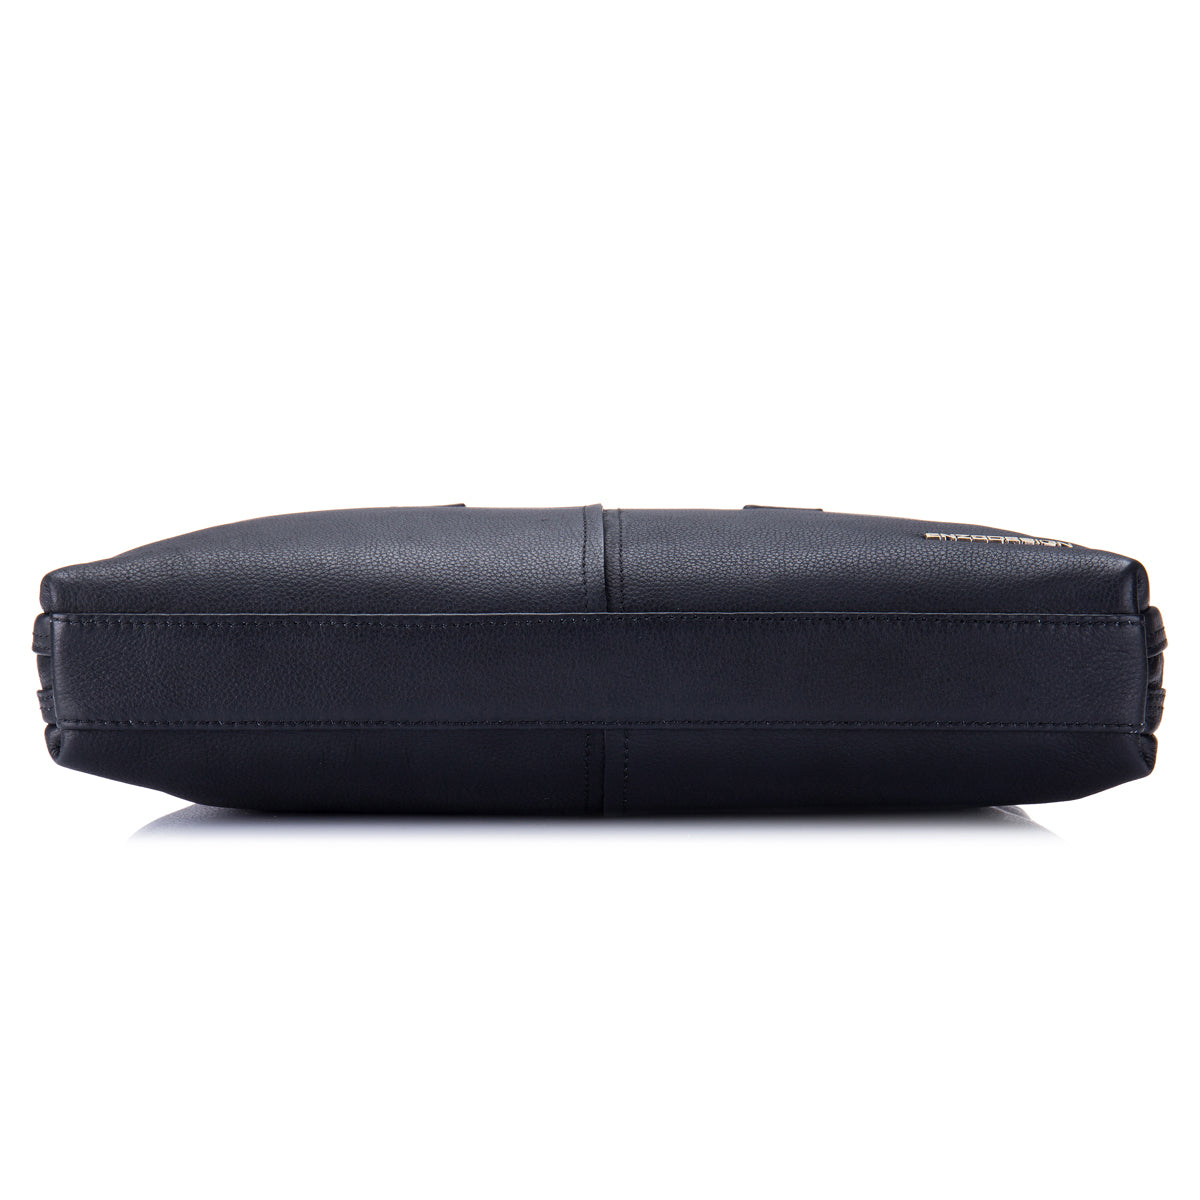 EnzoDesign Men's Urban Black Pebble Grained Leather 14" Laptop Soft Slim Brief